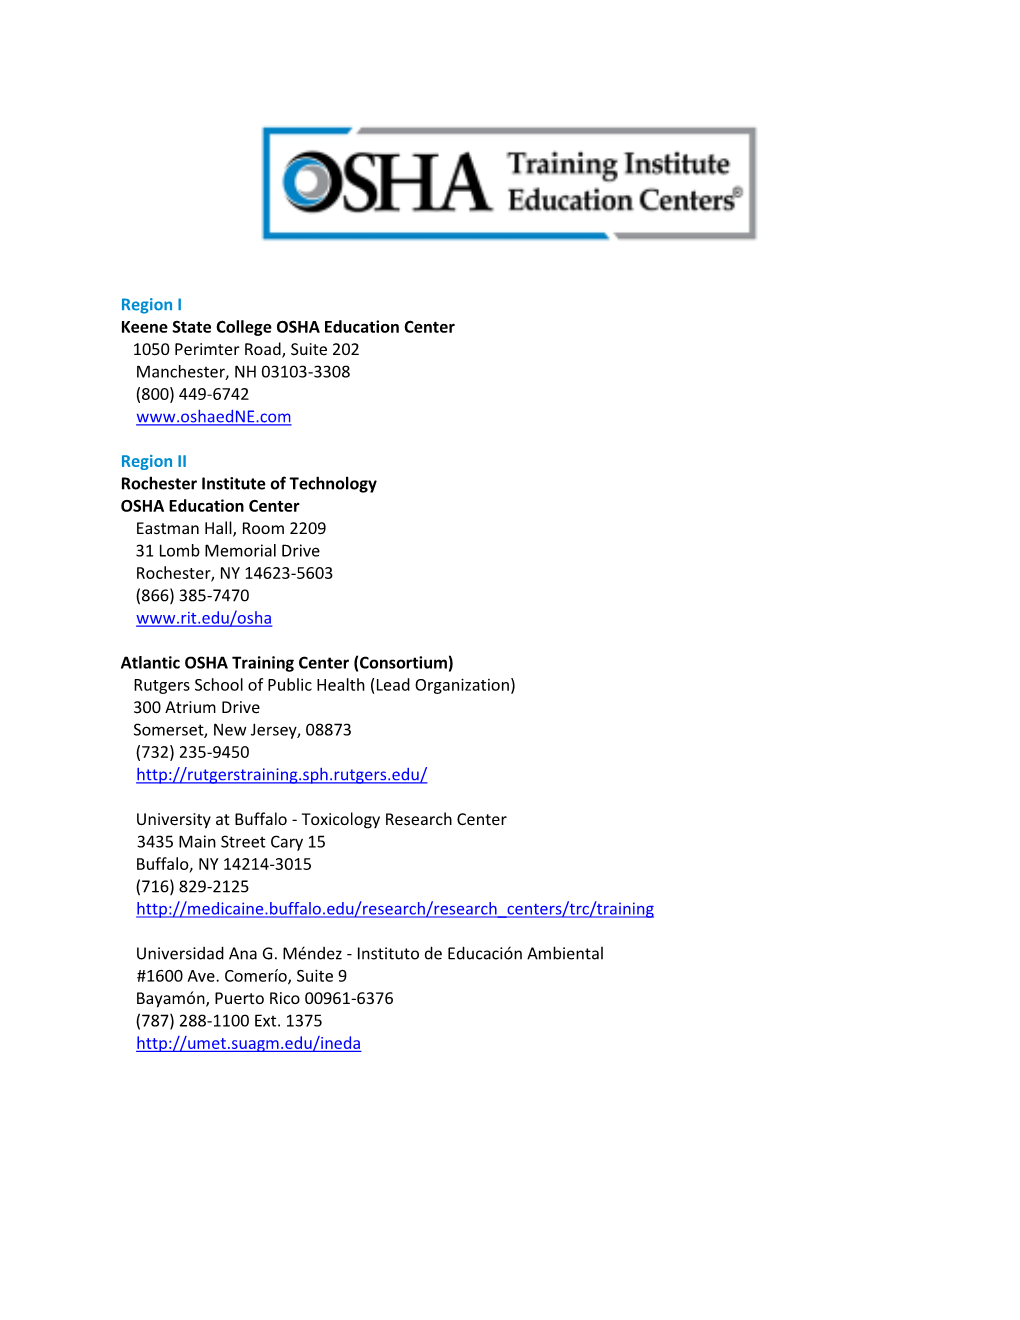 OSHA Training Institute Current Education Centers List